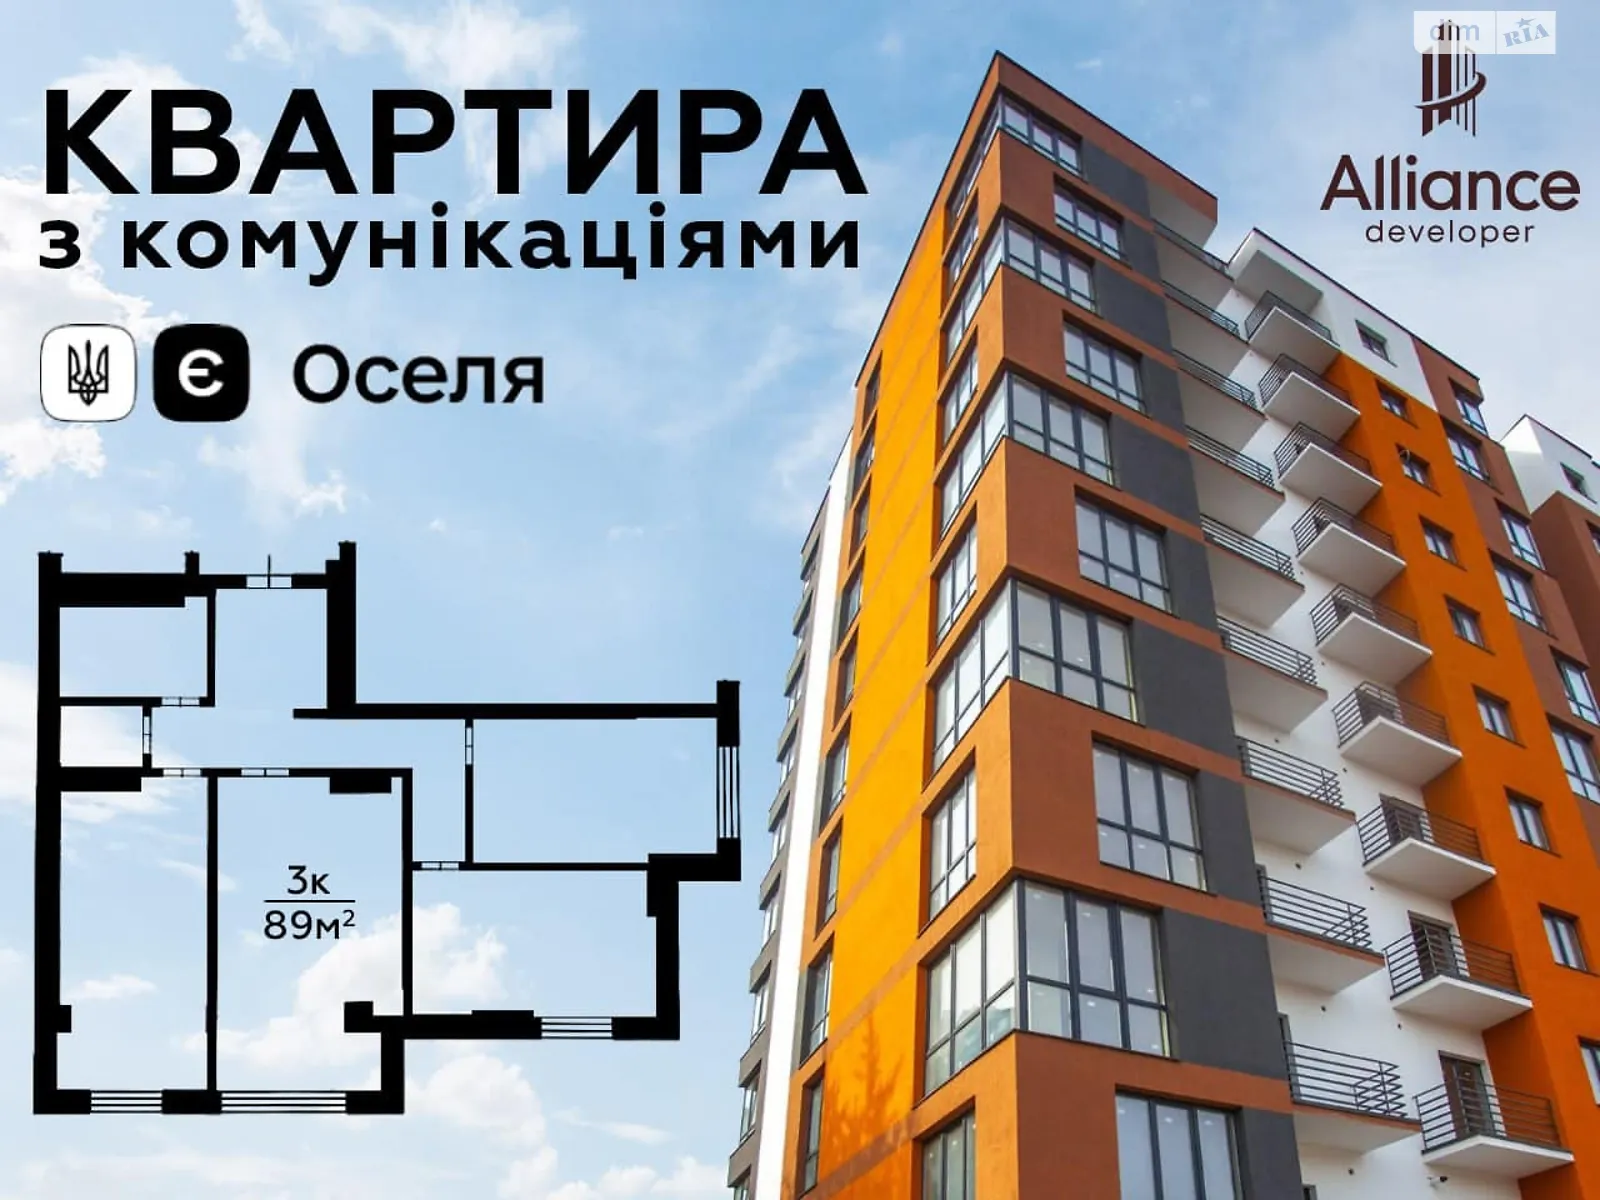 Продается 3-комнатная квартира 89.1 кв. м в Ивано-Франковске, цена: 77517 $